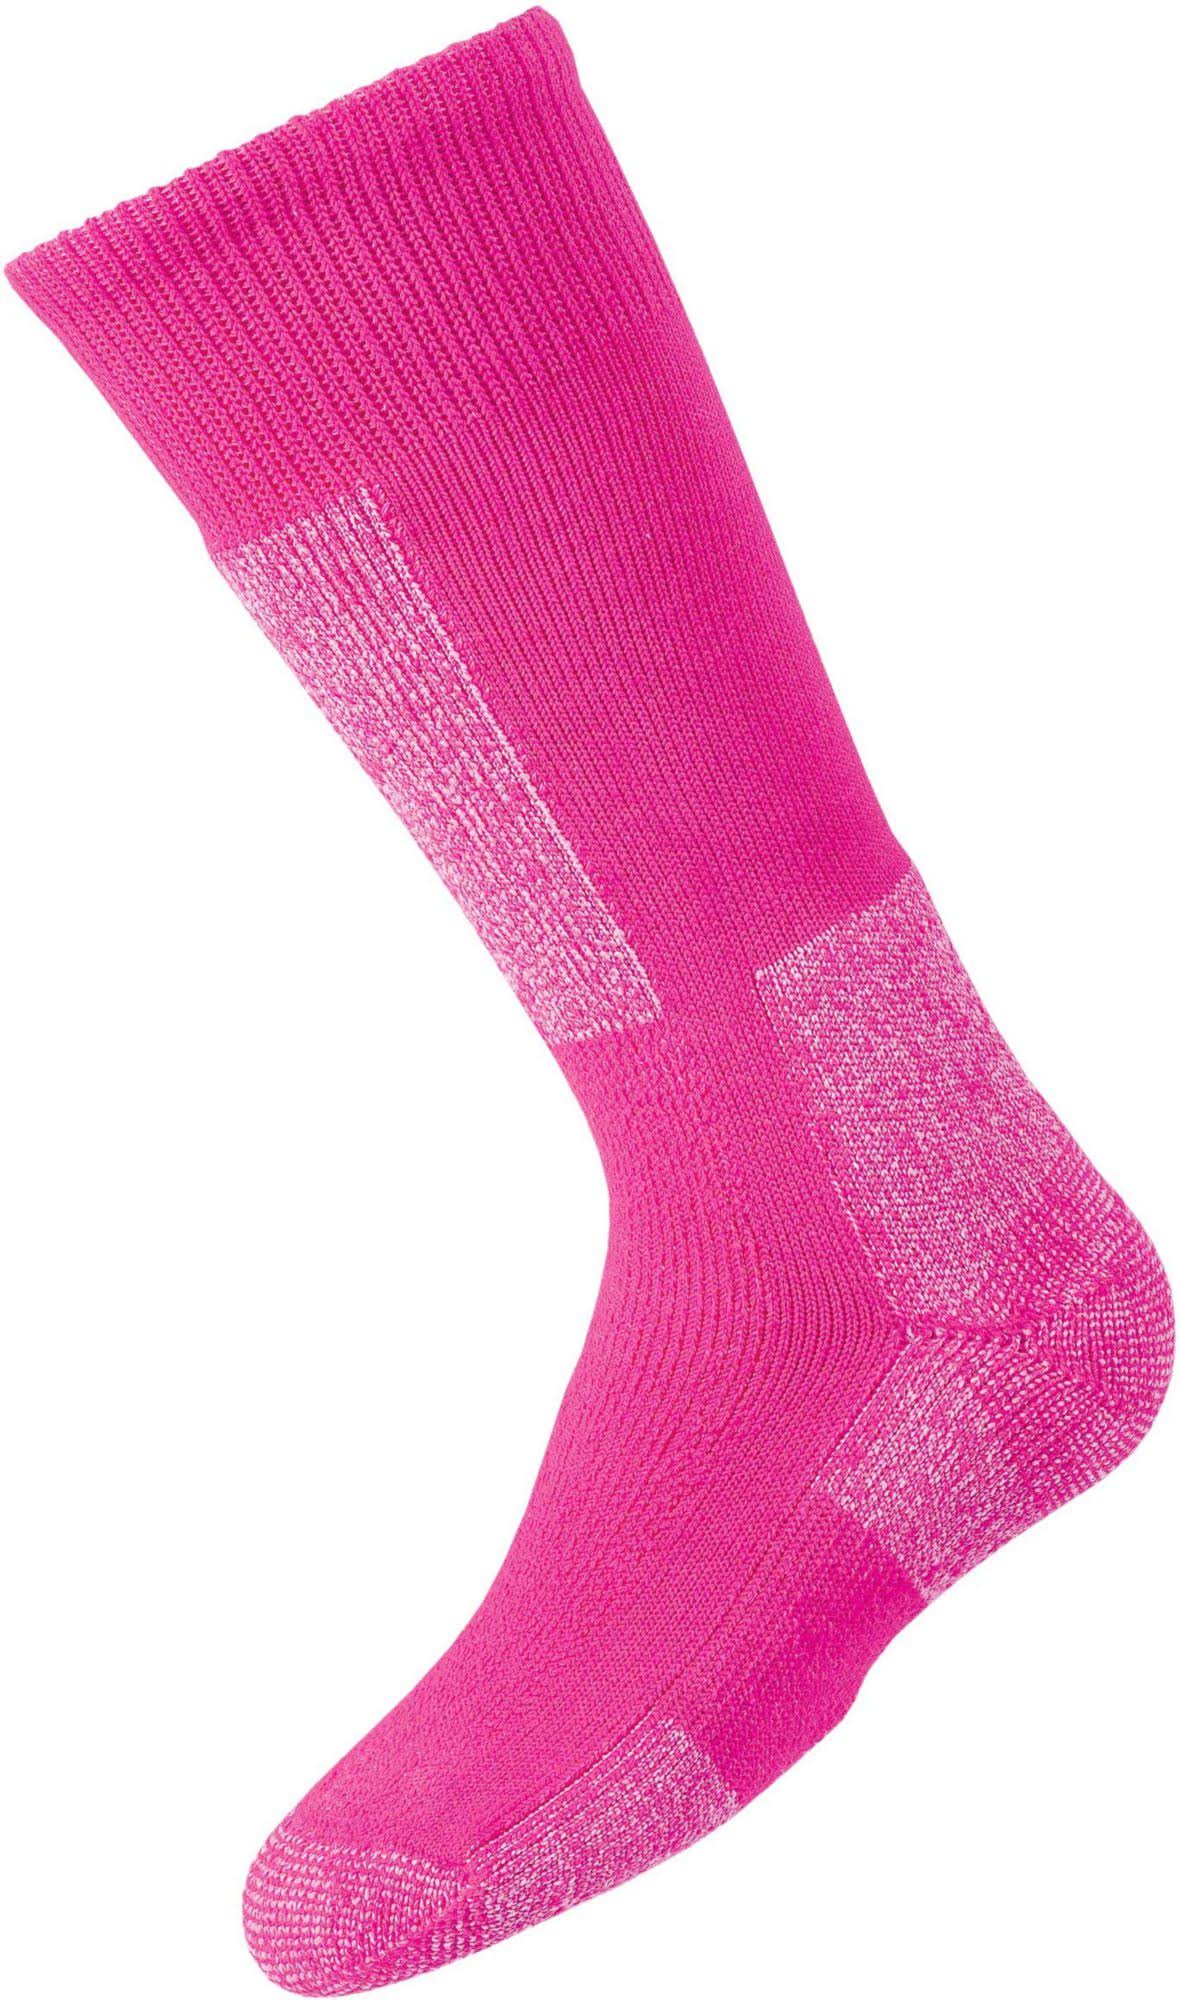 Thorlos Kid's KS Skiing Medium Cushion Over-Calf Socks, Schuss Pink/White, Medium